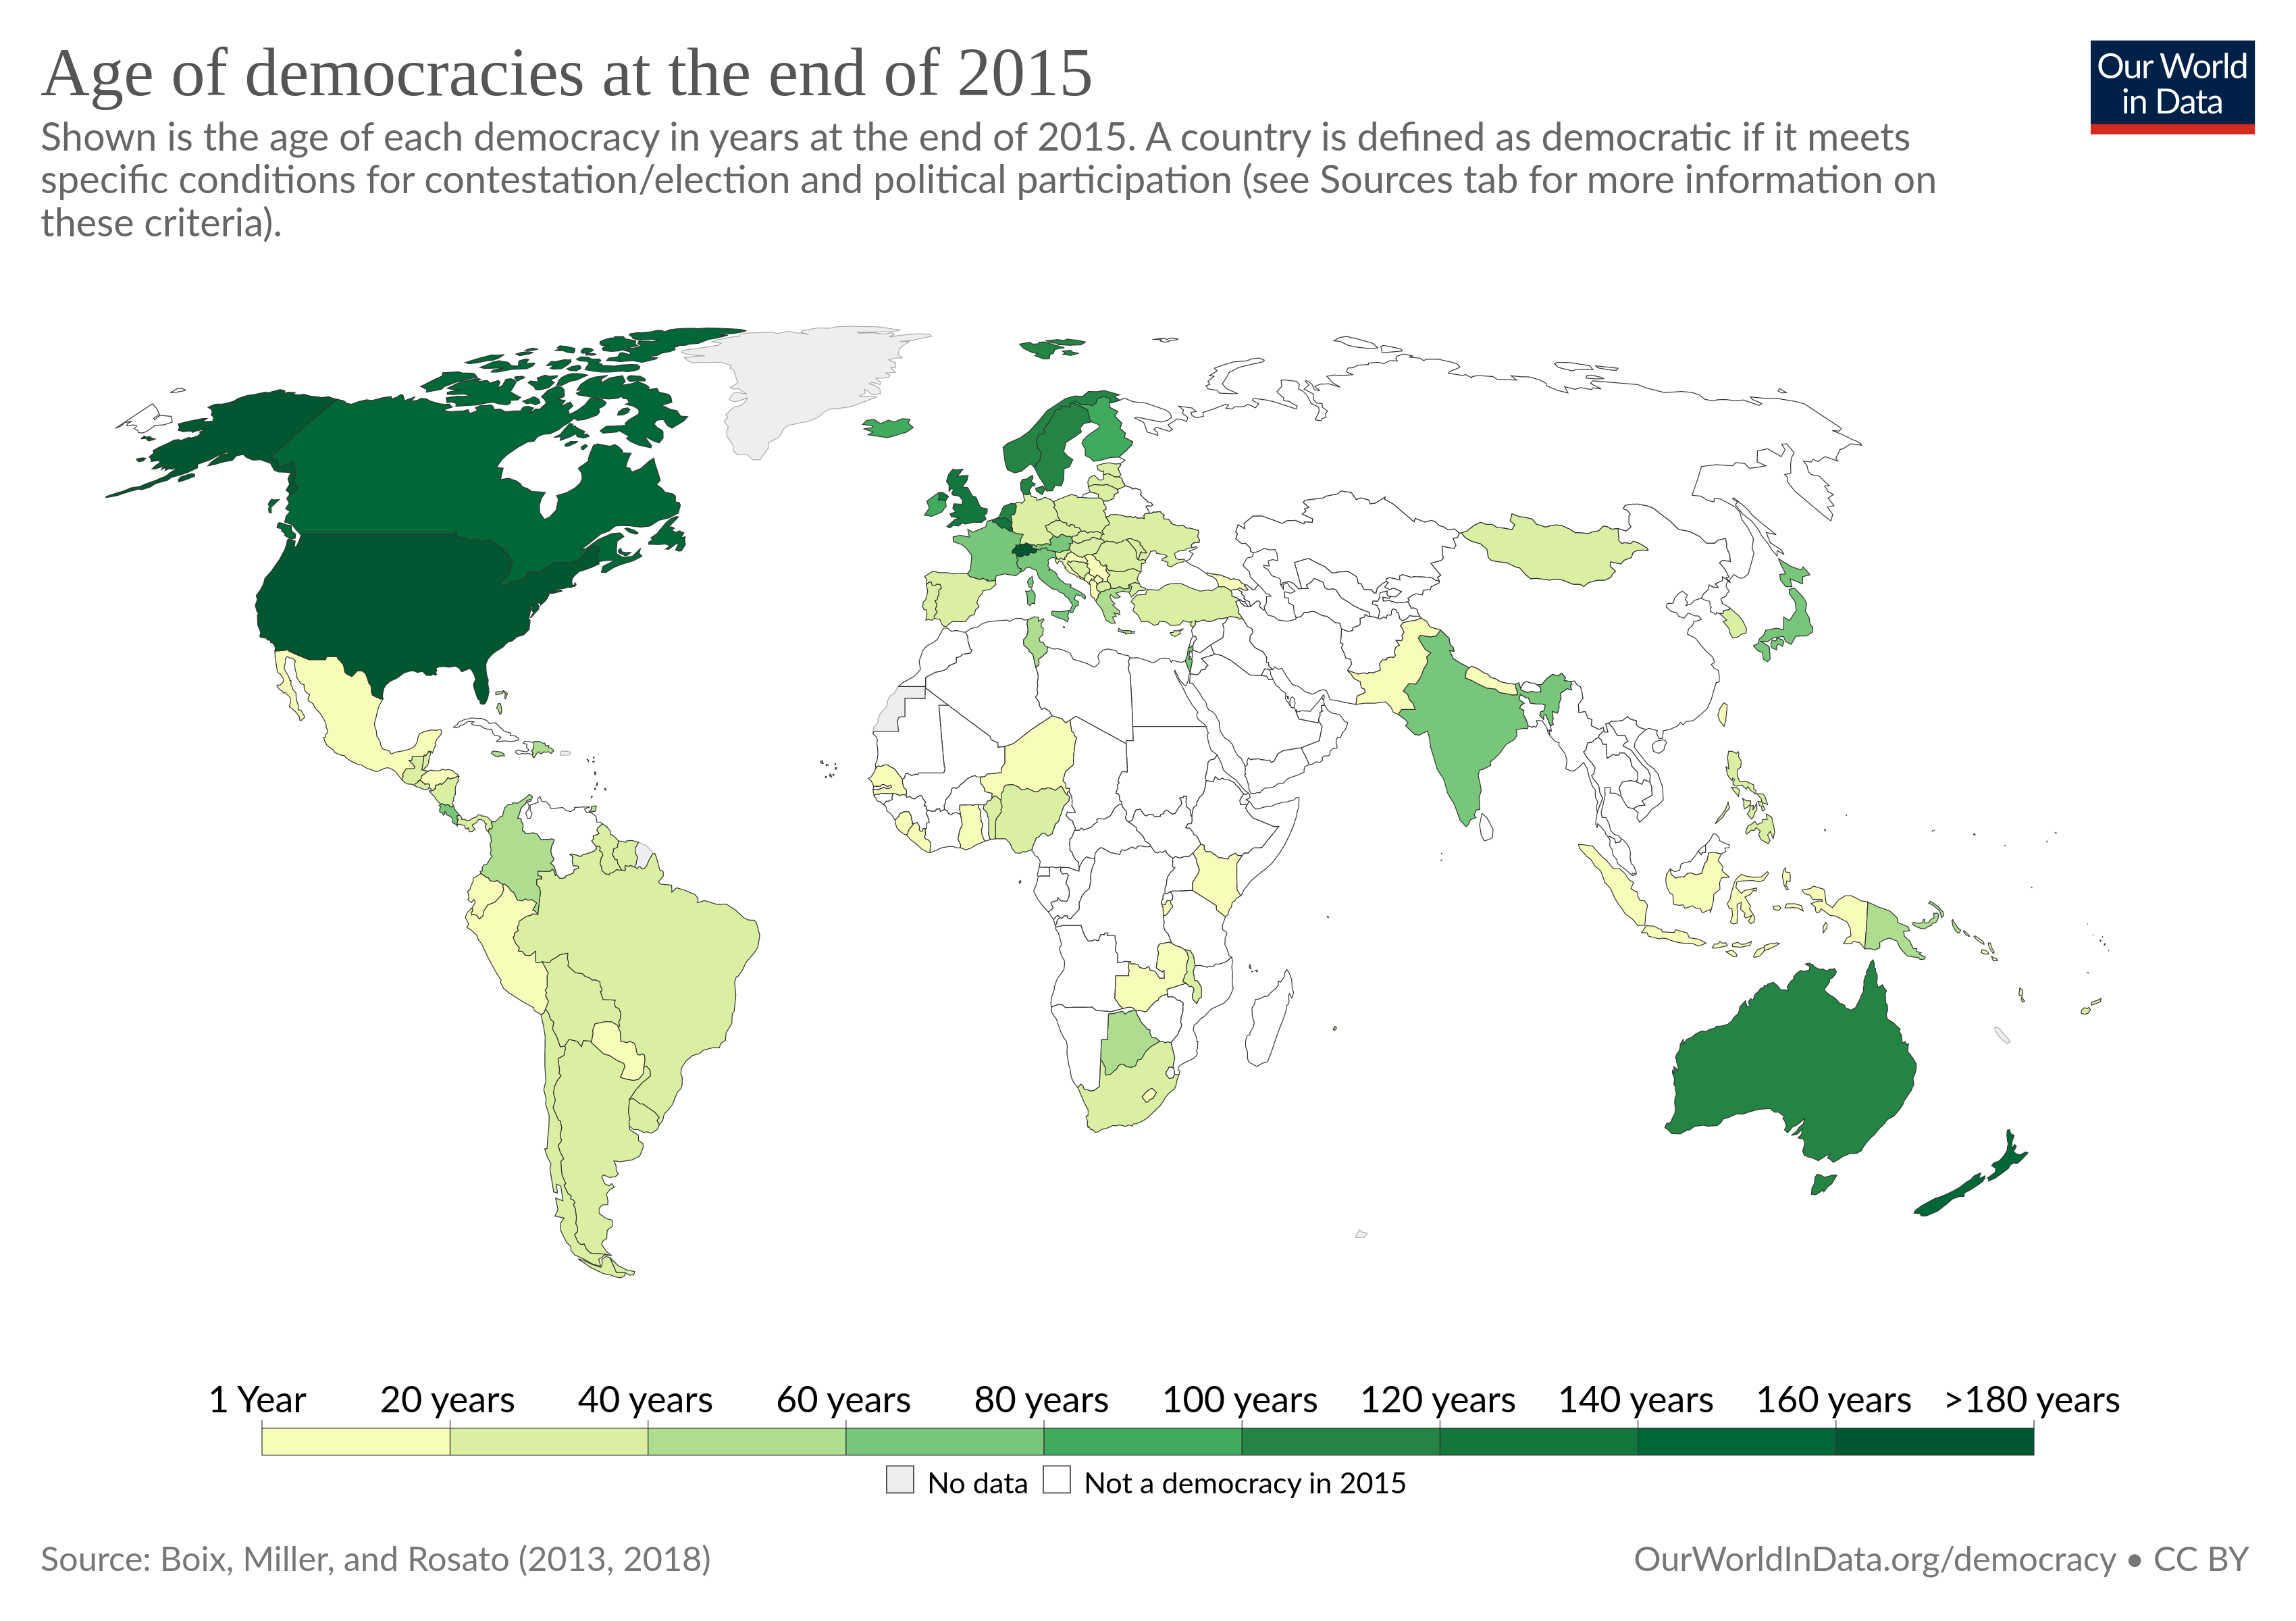 Ages of Democracies